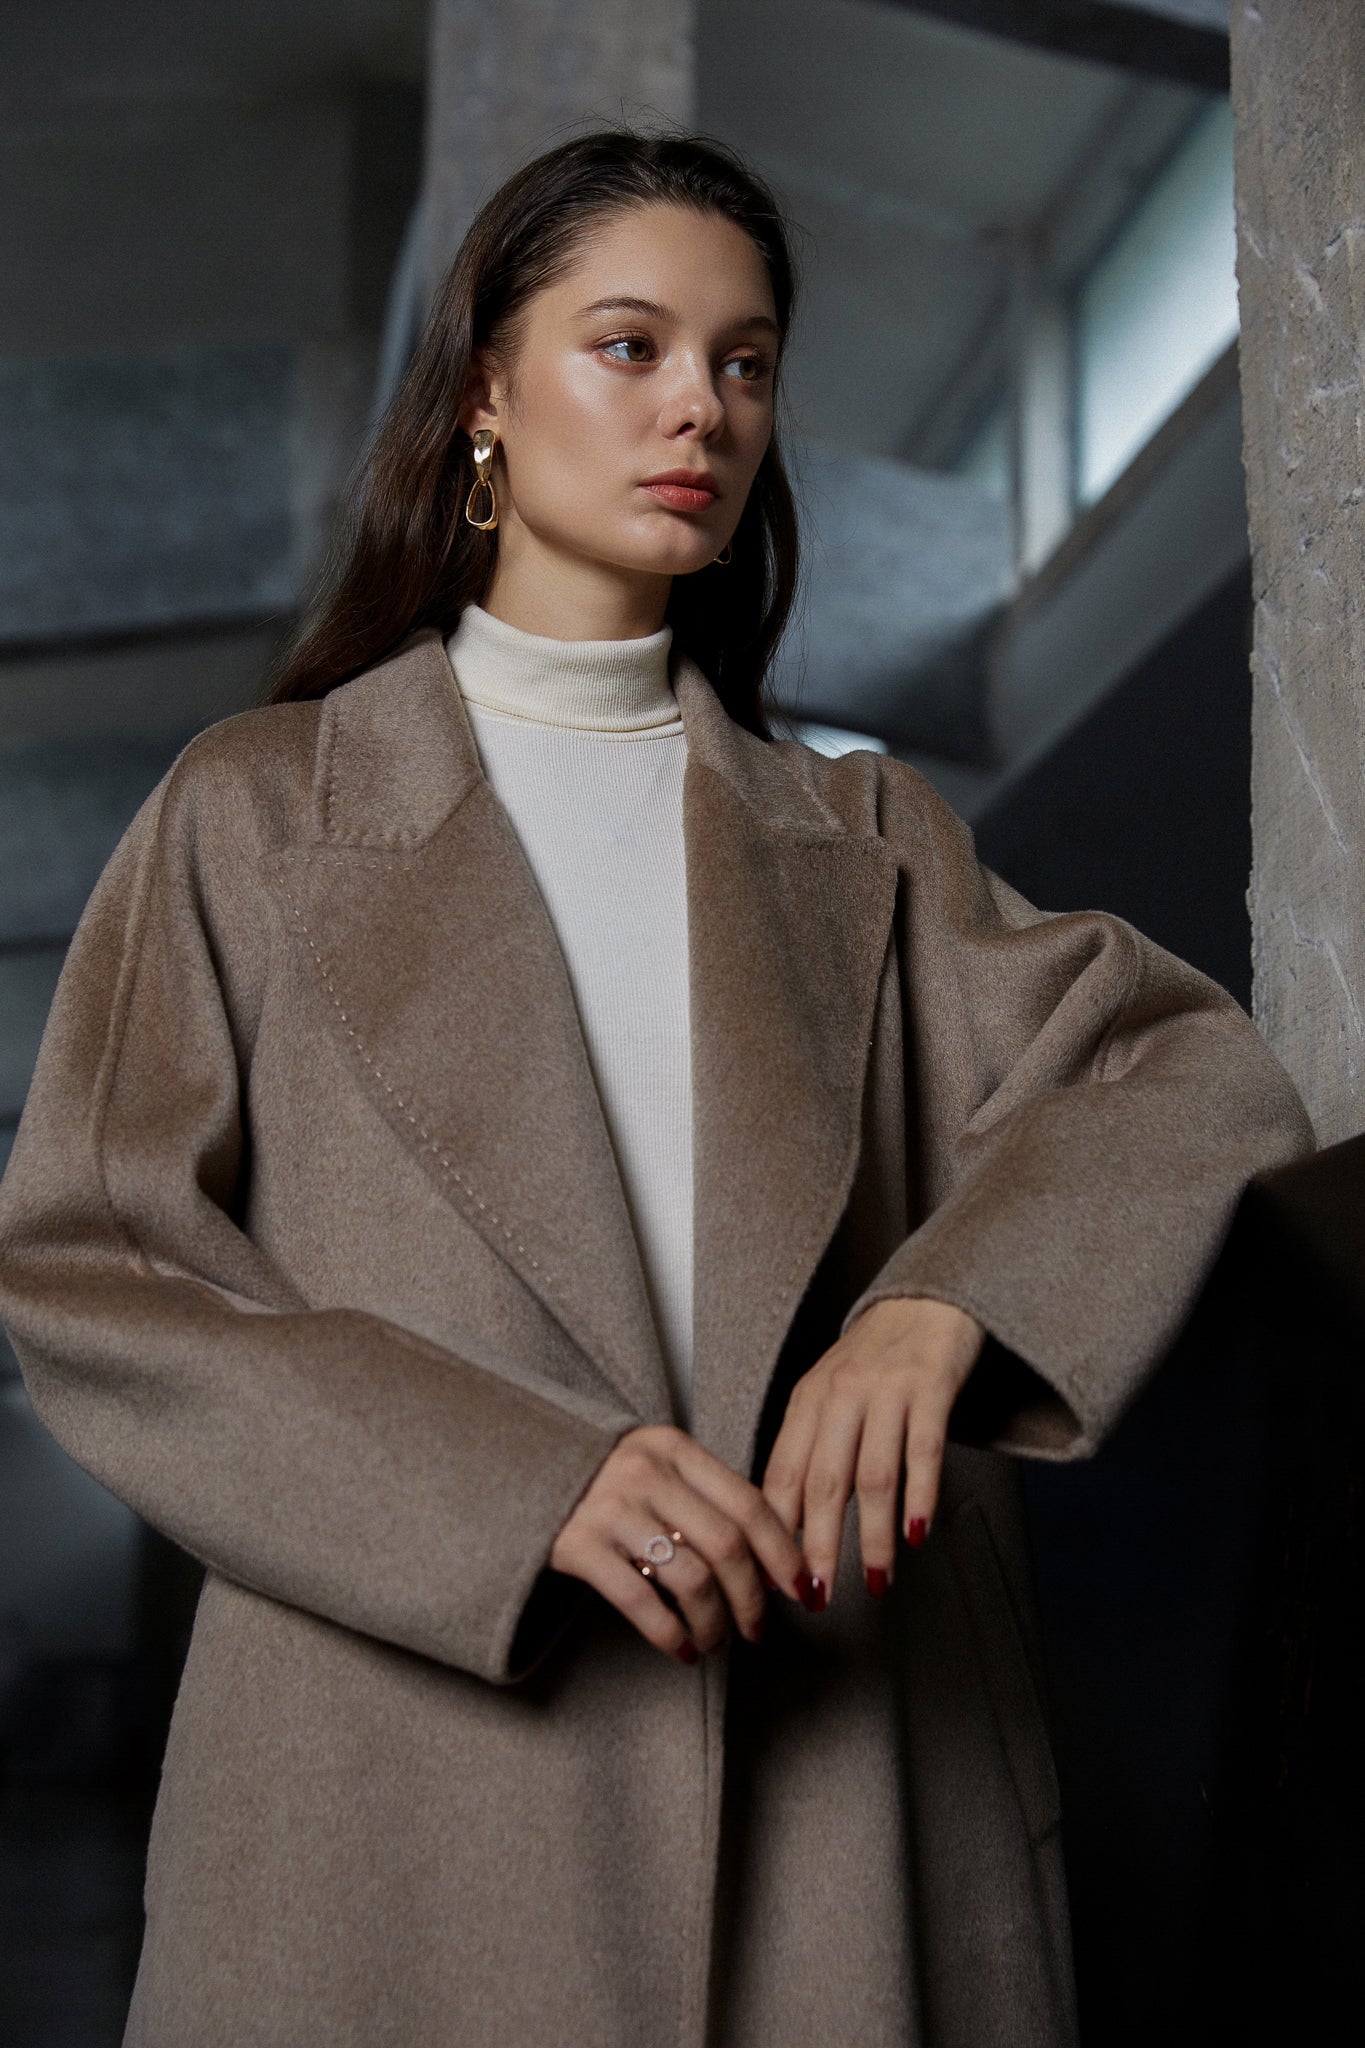 Fangyan | Noemie Cashmere Coat